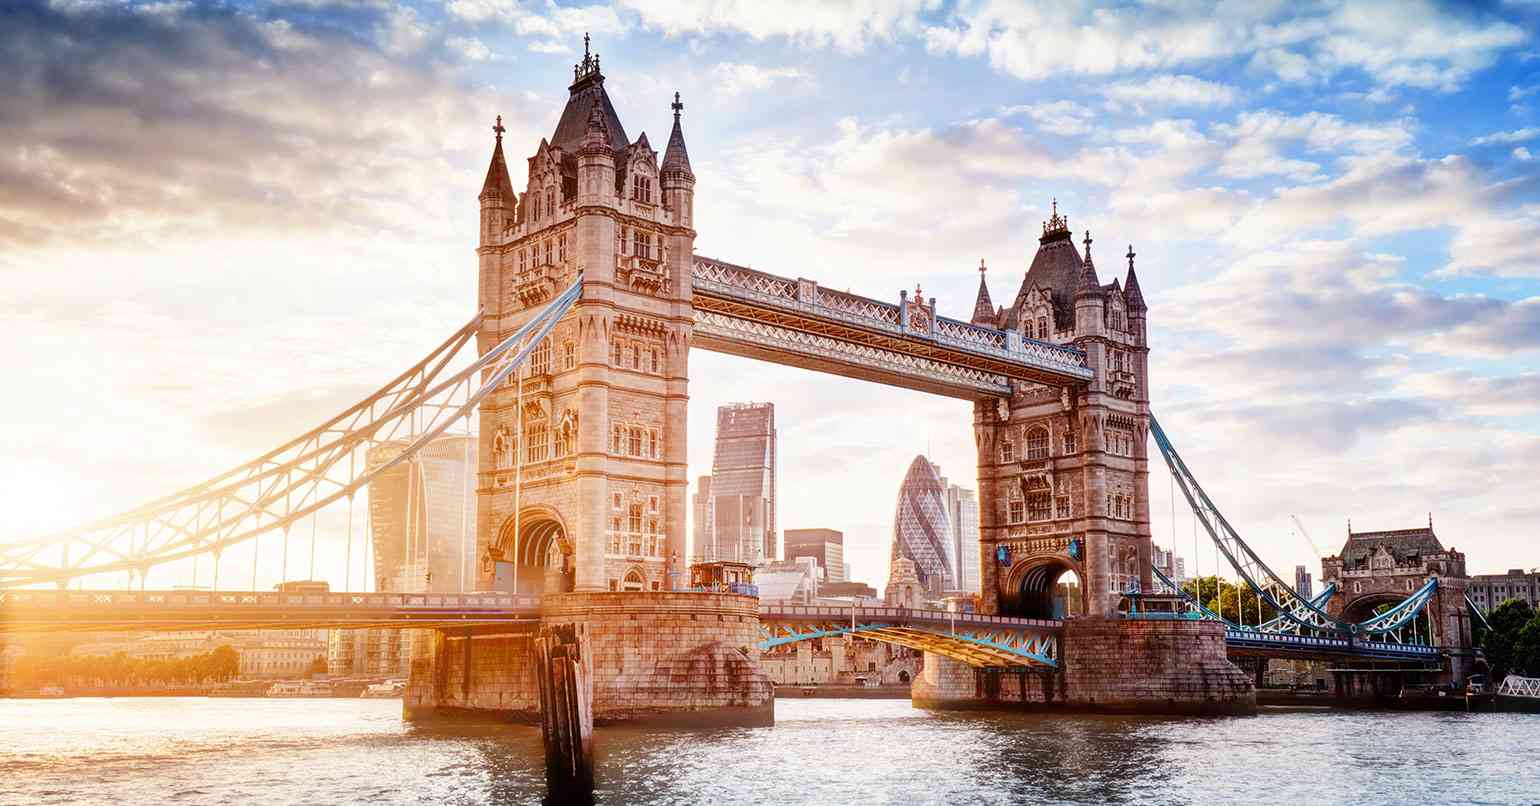 London Photography Spot - Tower Bridge 